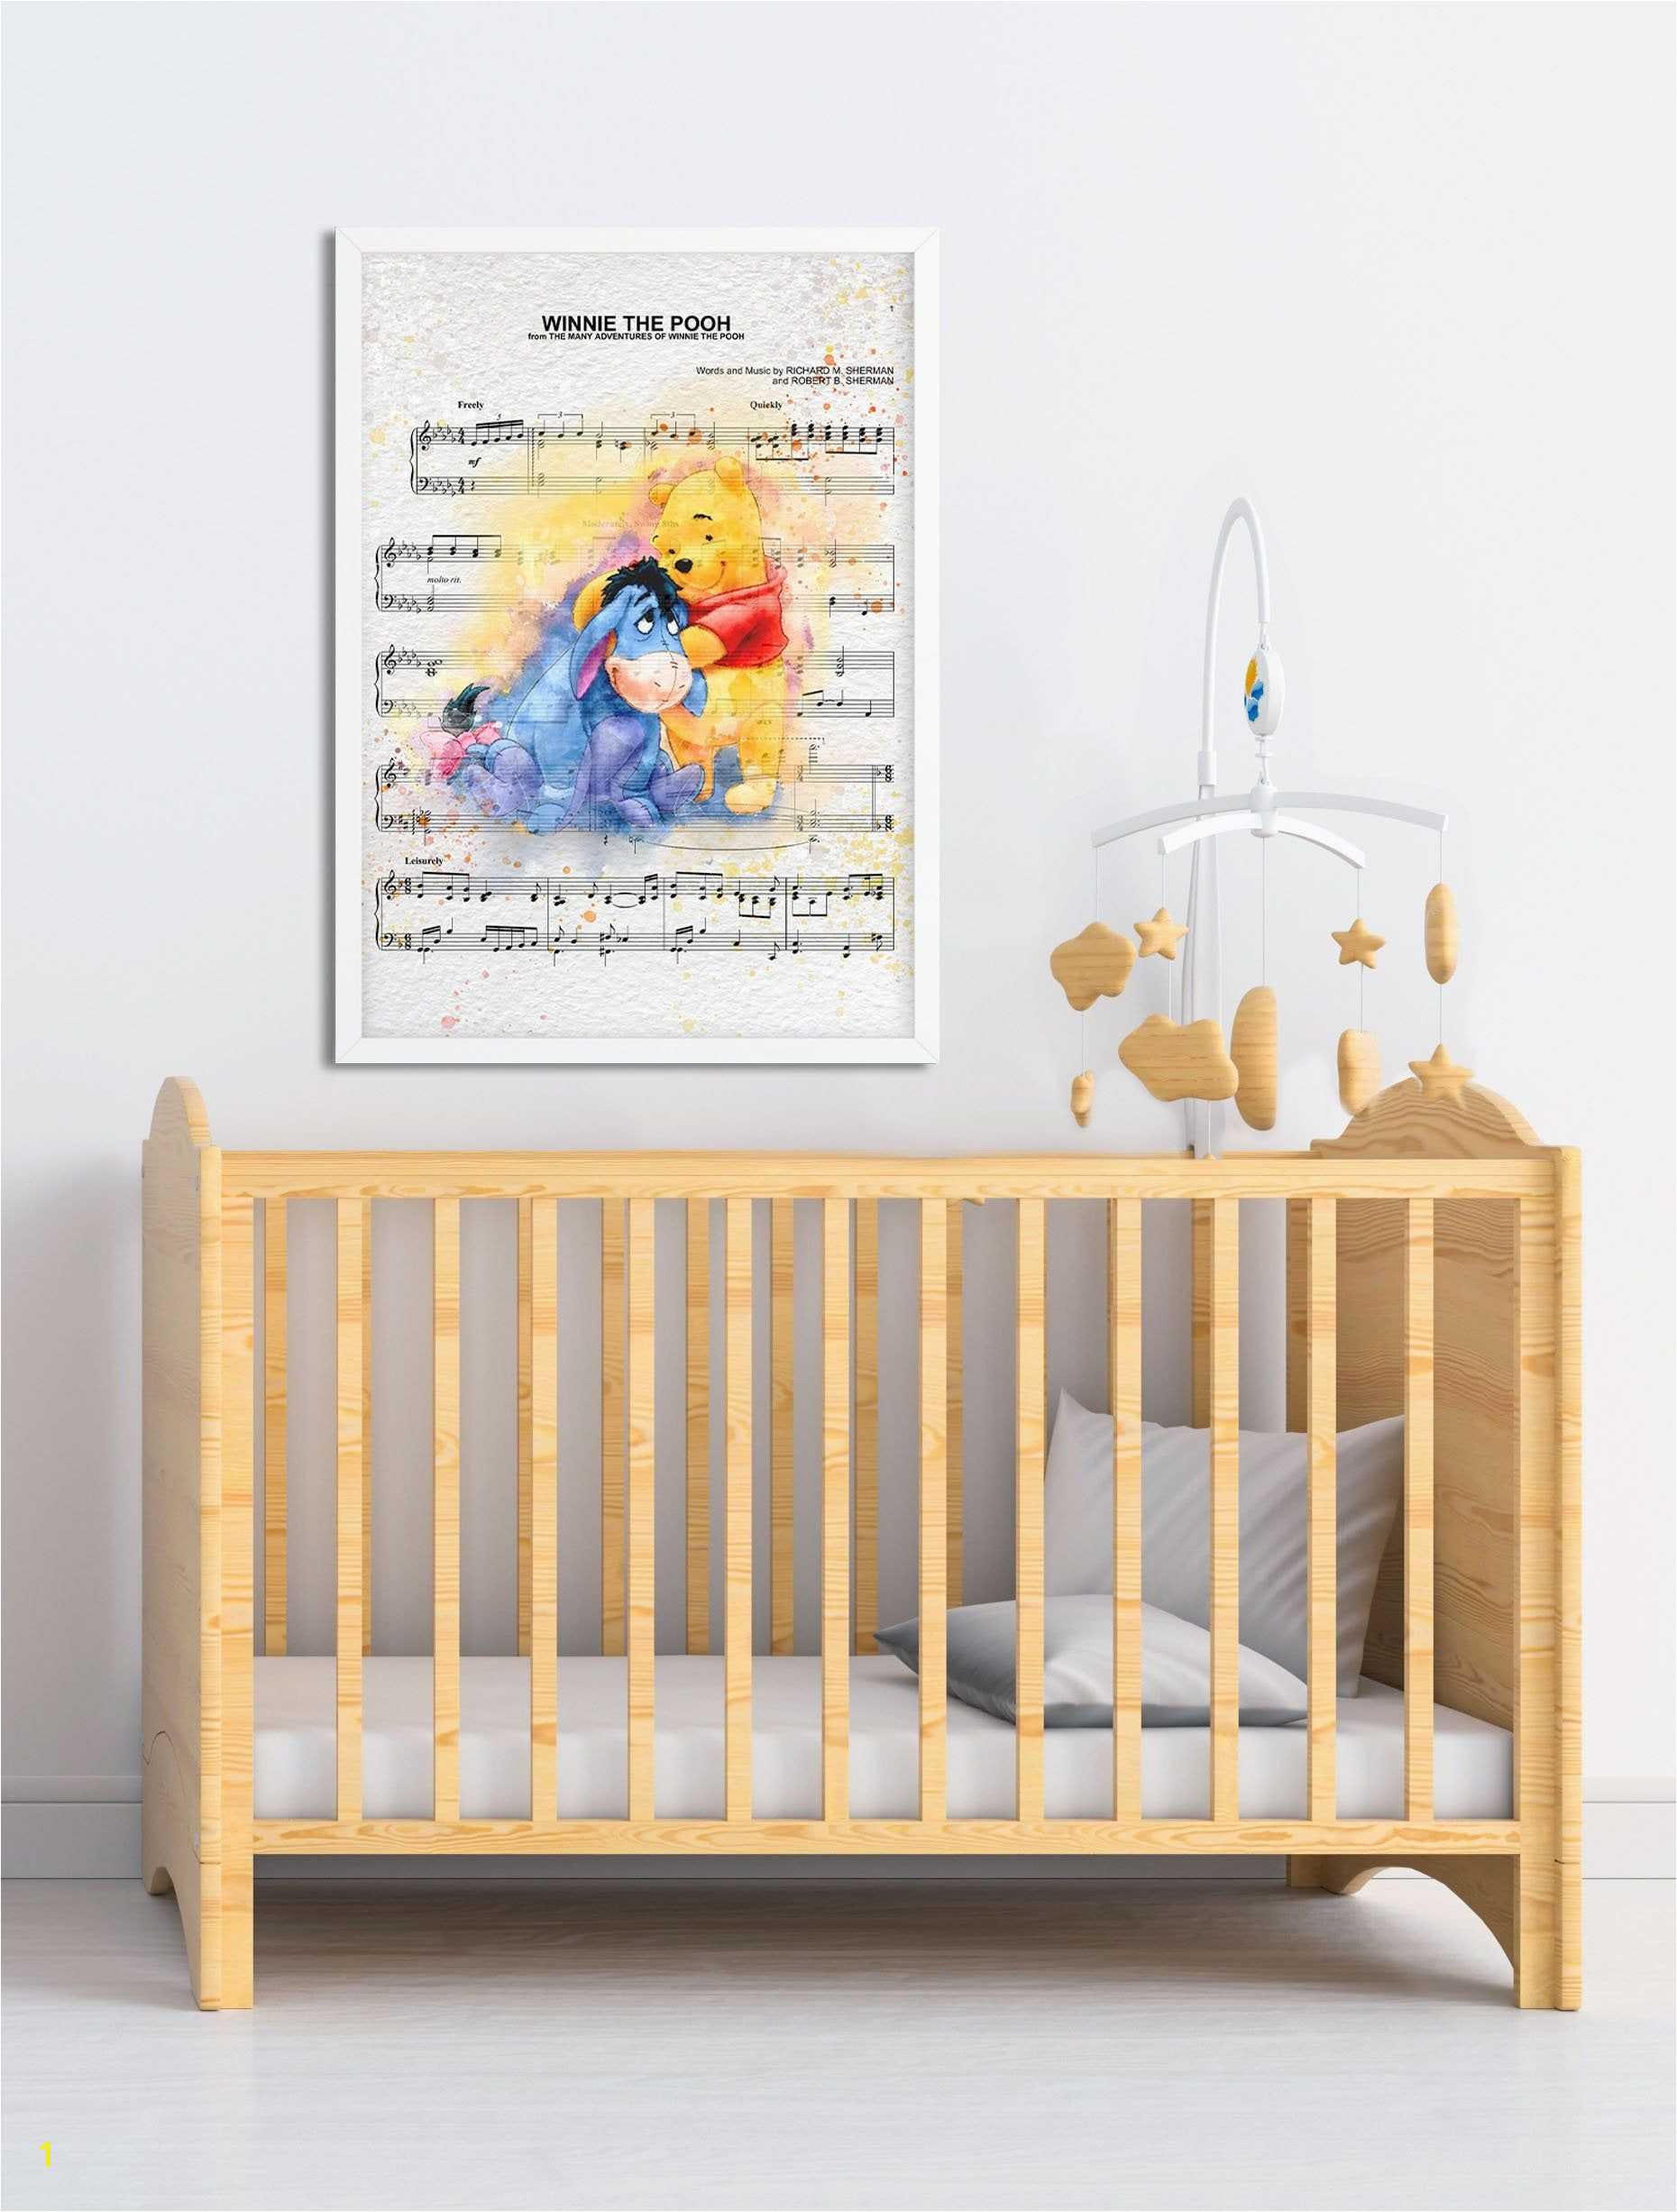 Winnie the Pooh Nursery Wall Murals Winnie the Pooh Print Disney Print Disney Nursery Gift